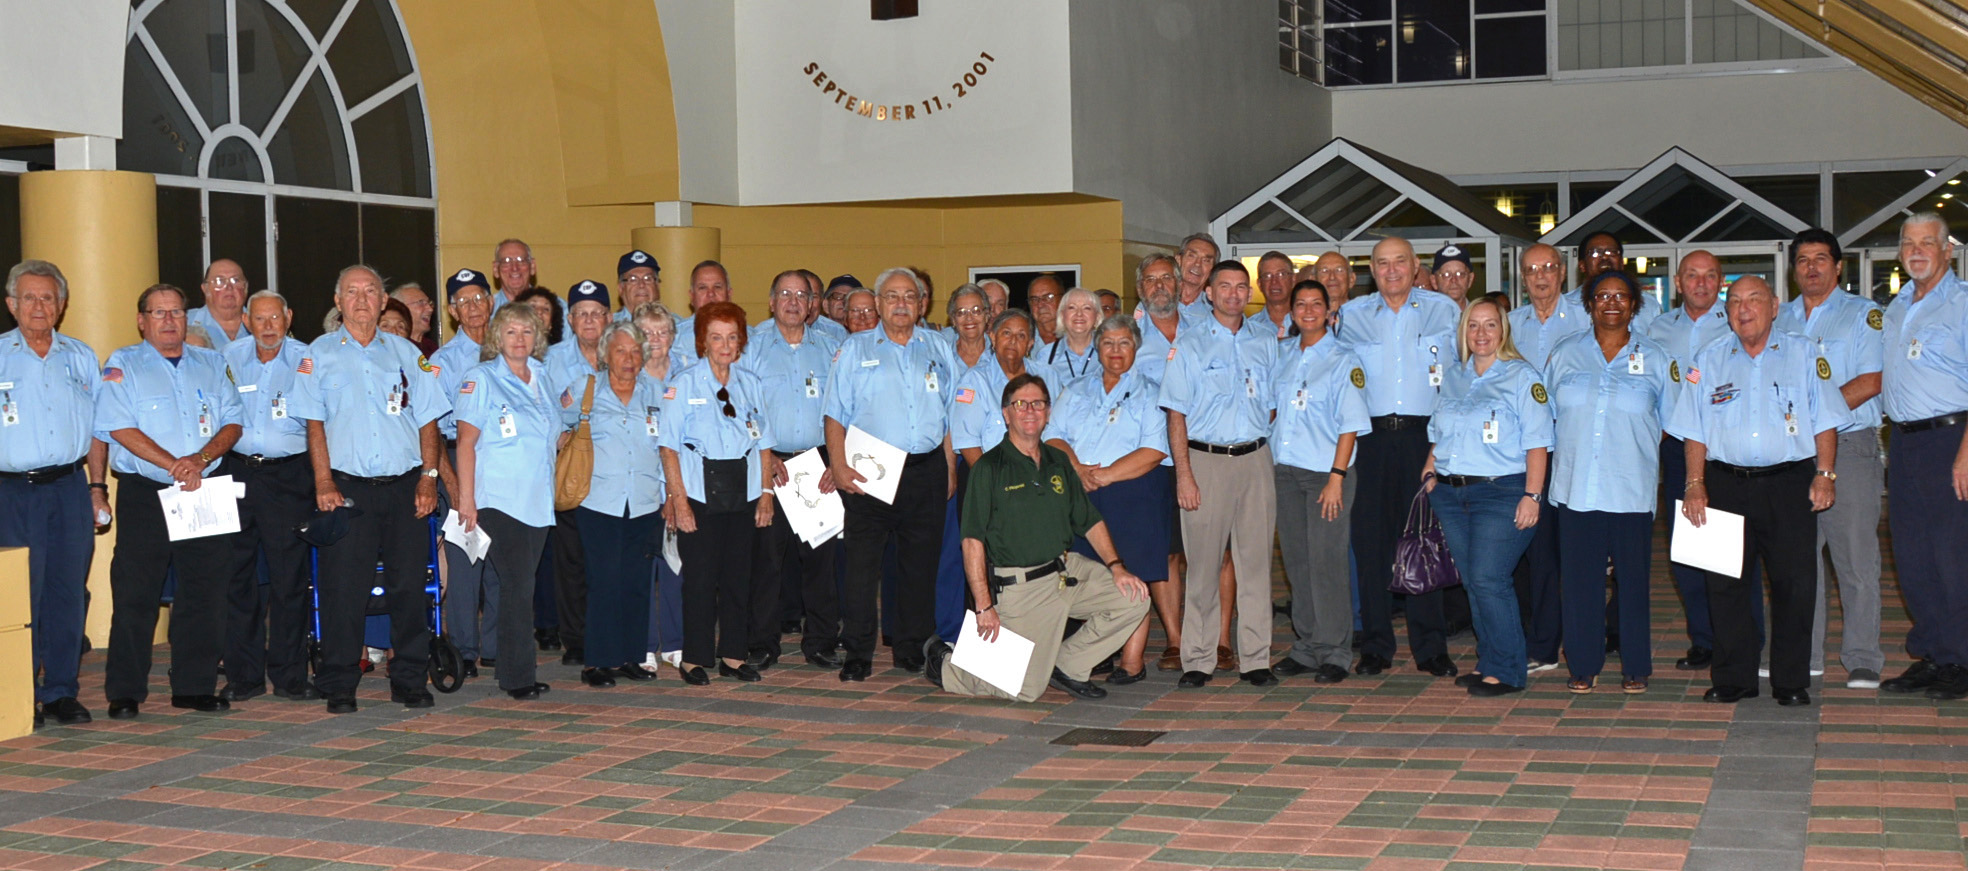 Tamarac COP Volunteers at the April 2015 City Commission Meeting